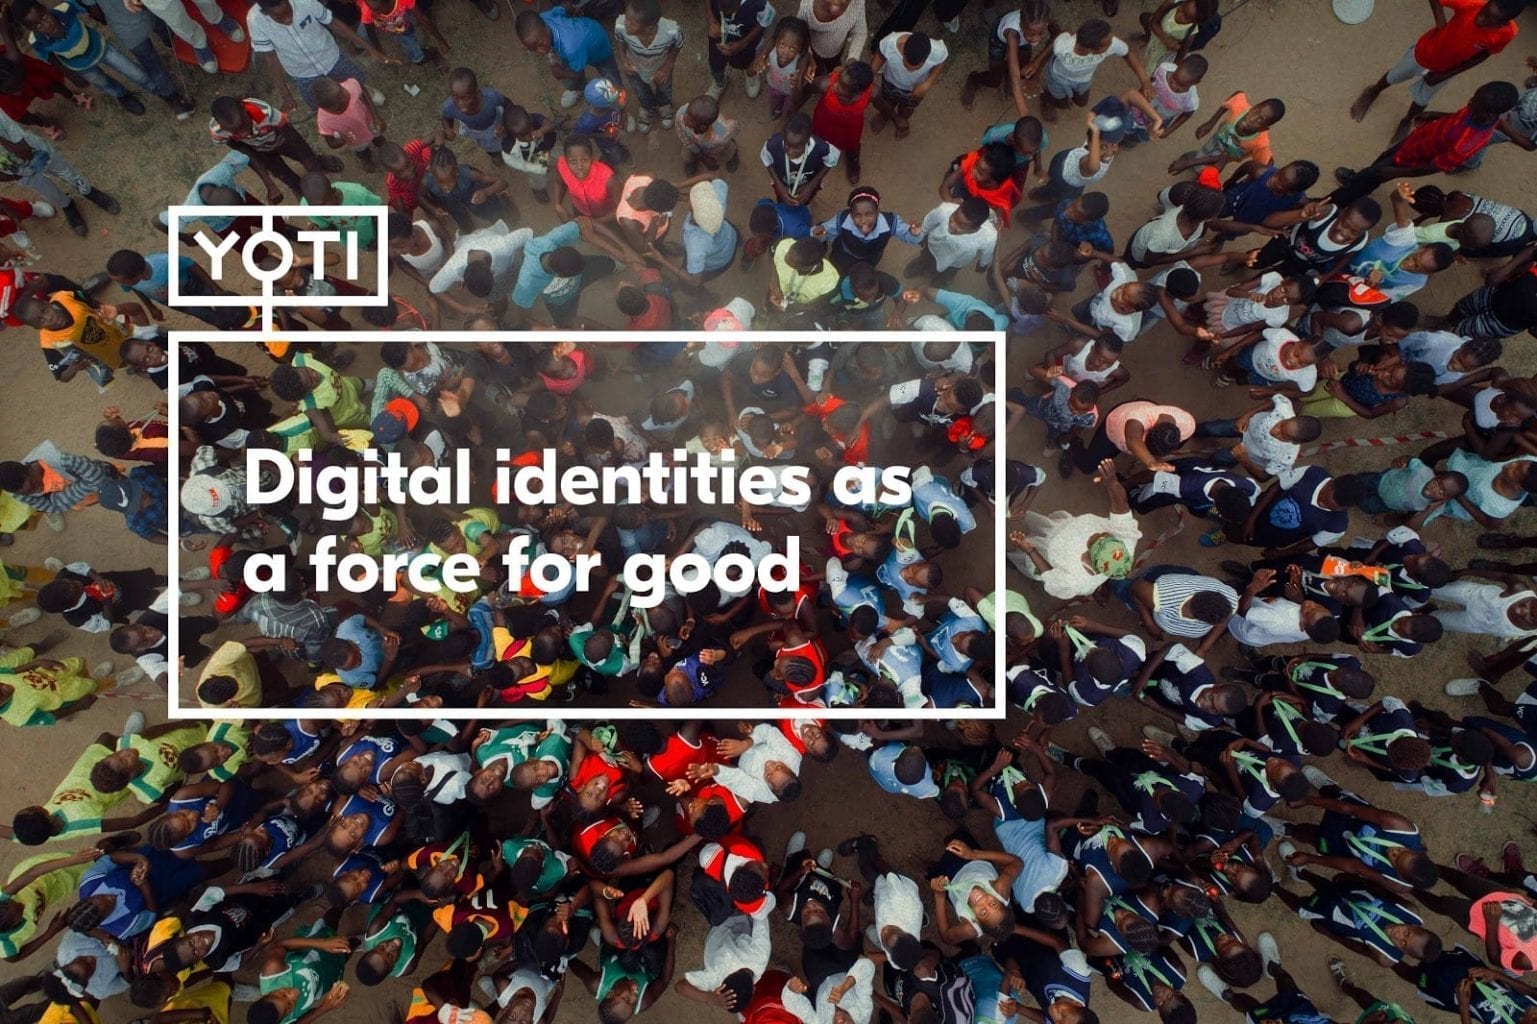 Meet the 2019 Yoti Digital Identity Fellows